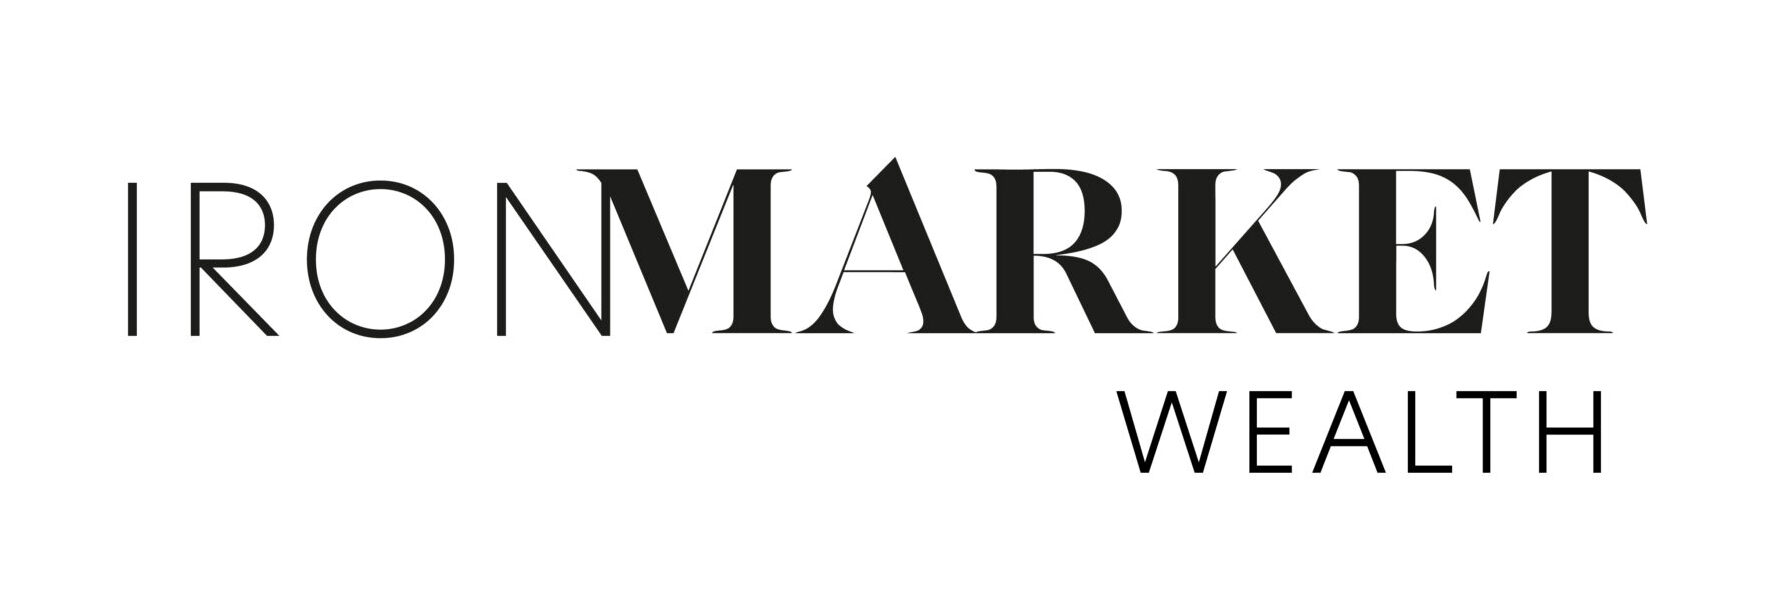 IronMarket Wealth Logo